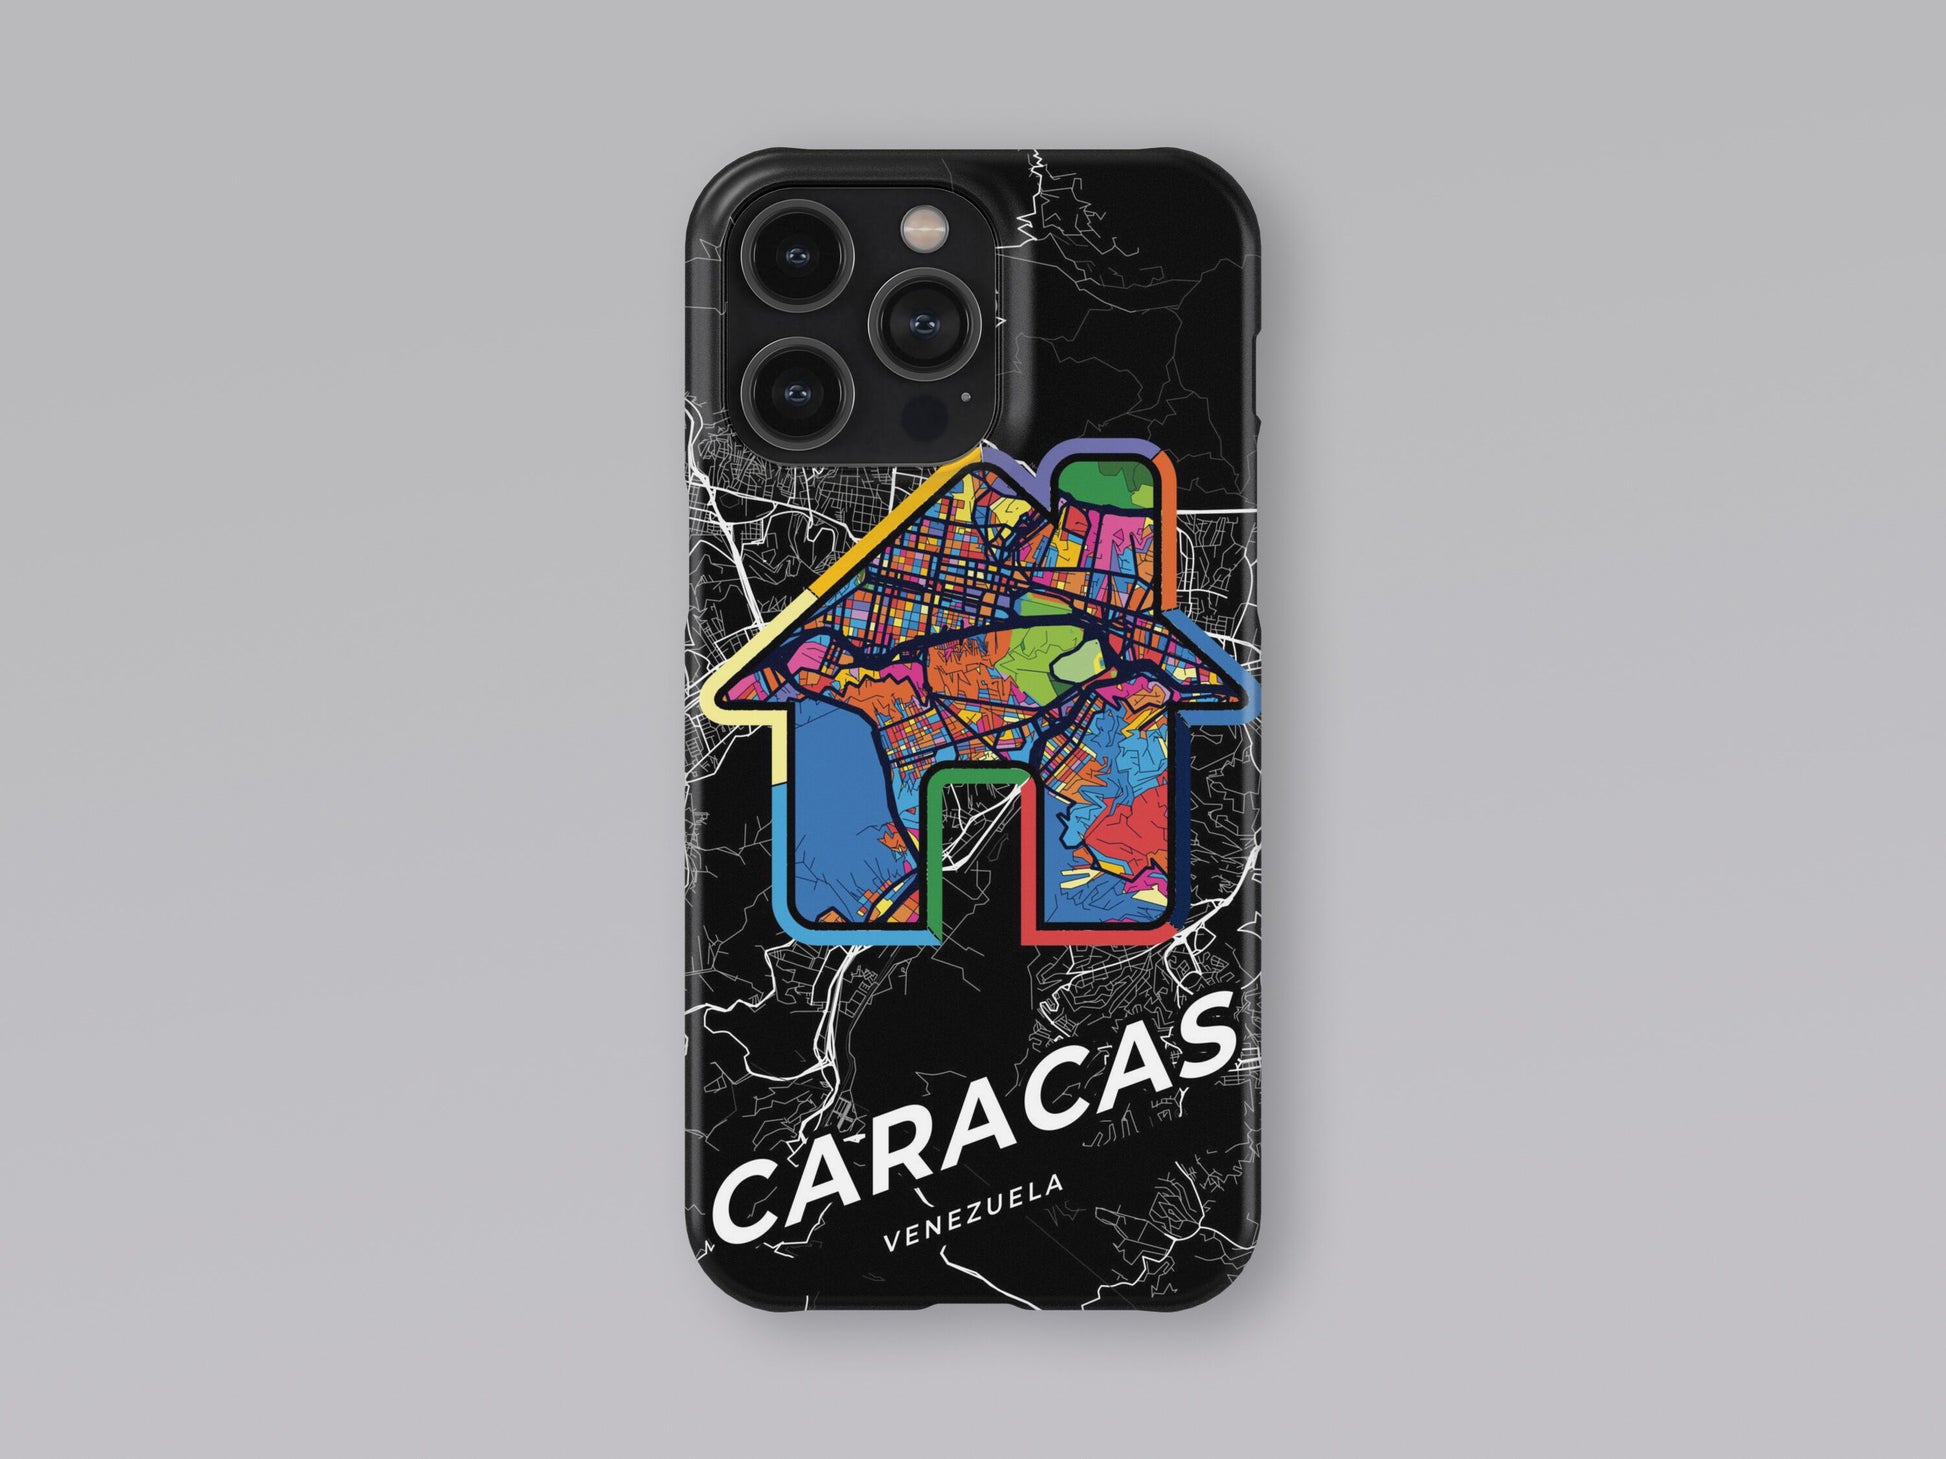 Caracas Venezuela slim phone case with colorful icon. Birthday, wedding or housewarming gift. Couple match cases. 3